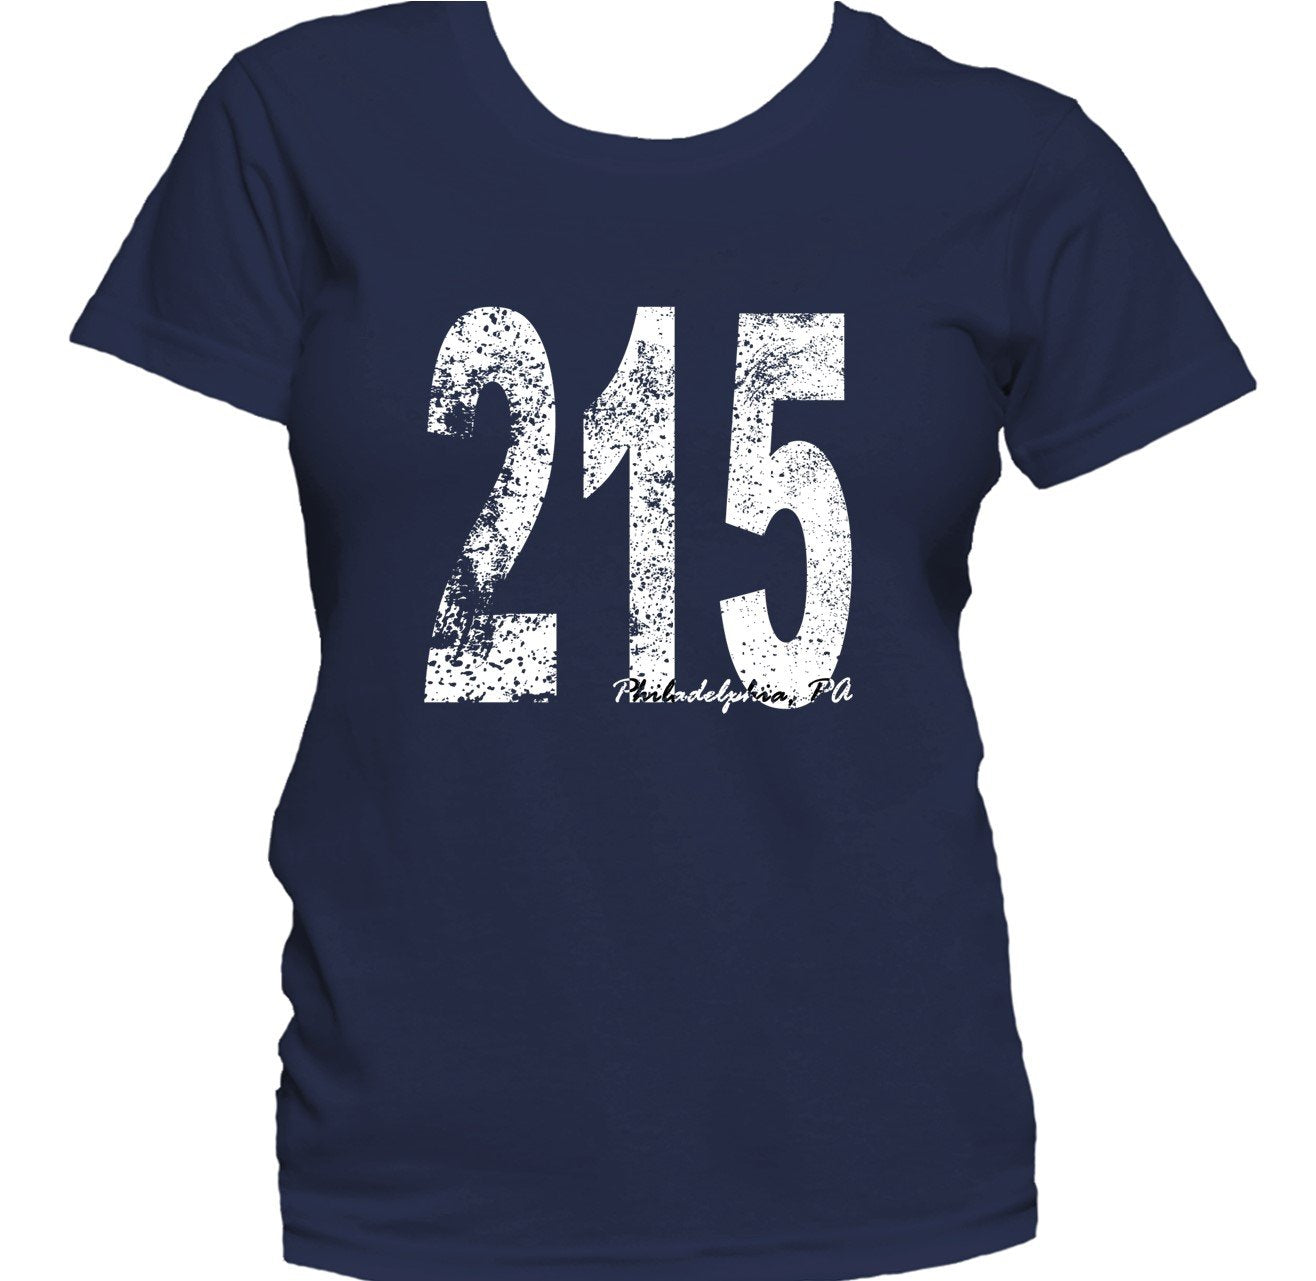 Retro Style Philadelphia Area Code 215 Women's T-Shirt